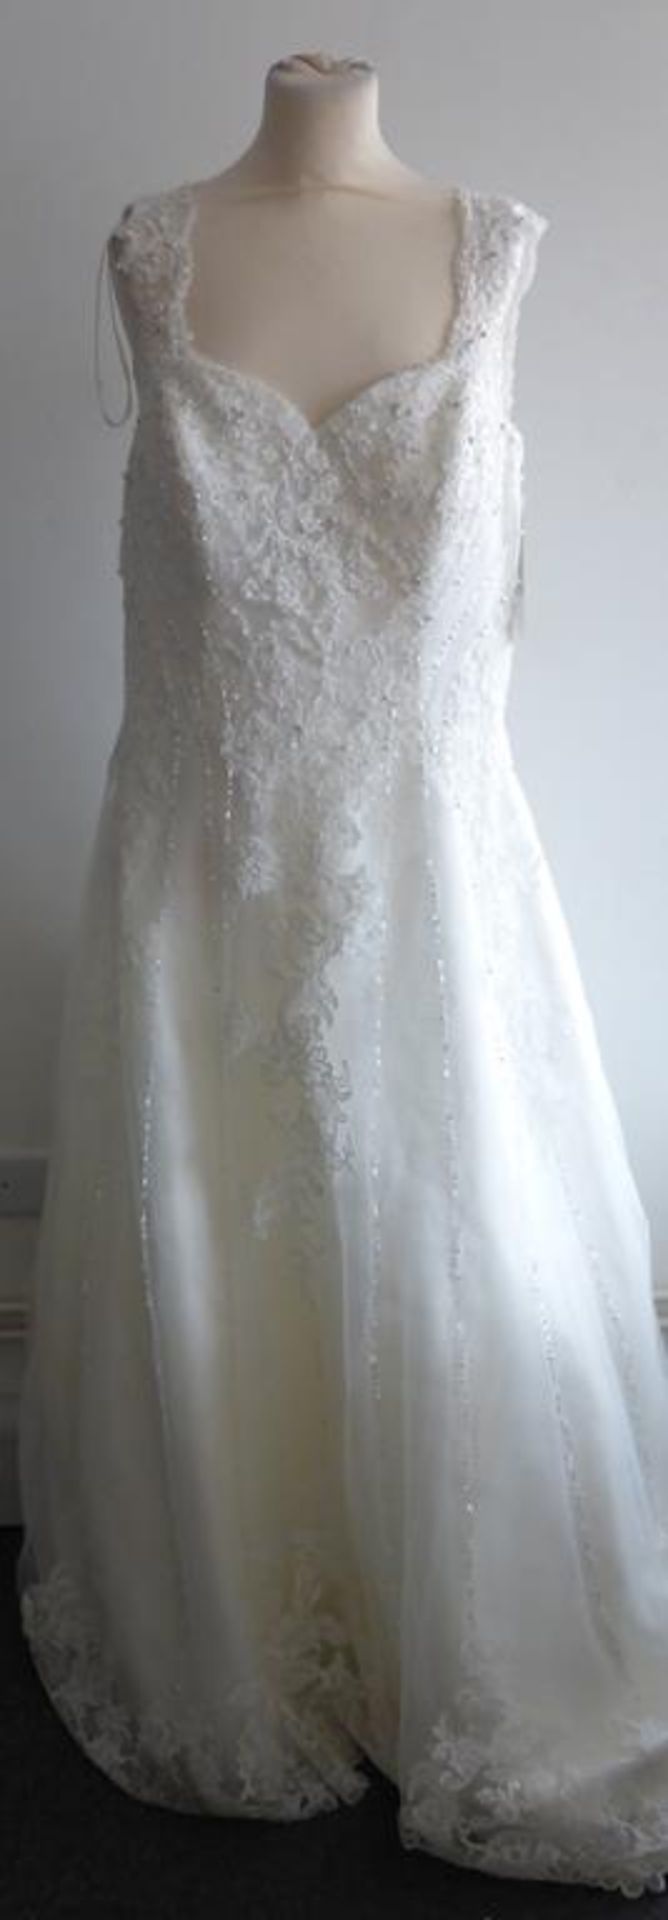 * Unforgetable By Bonny Bridal, Size 18, Style 1713, Wedding Dress.